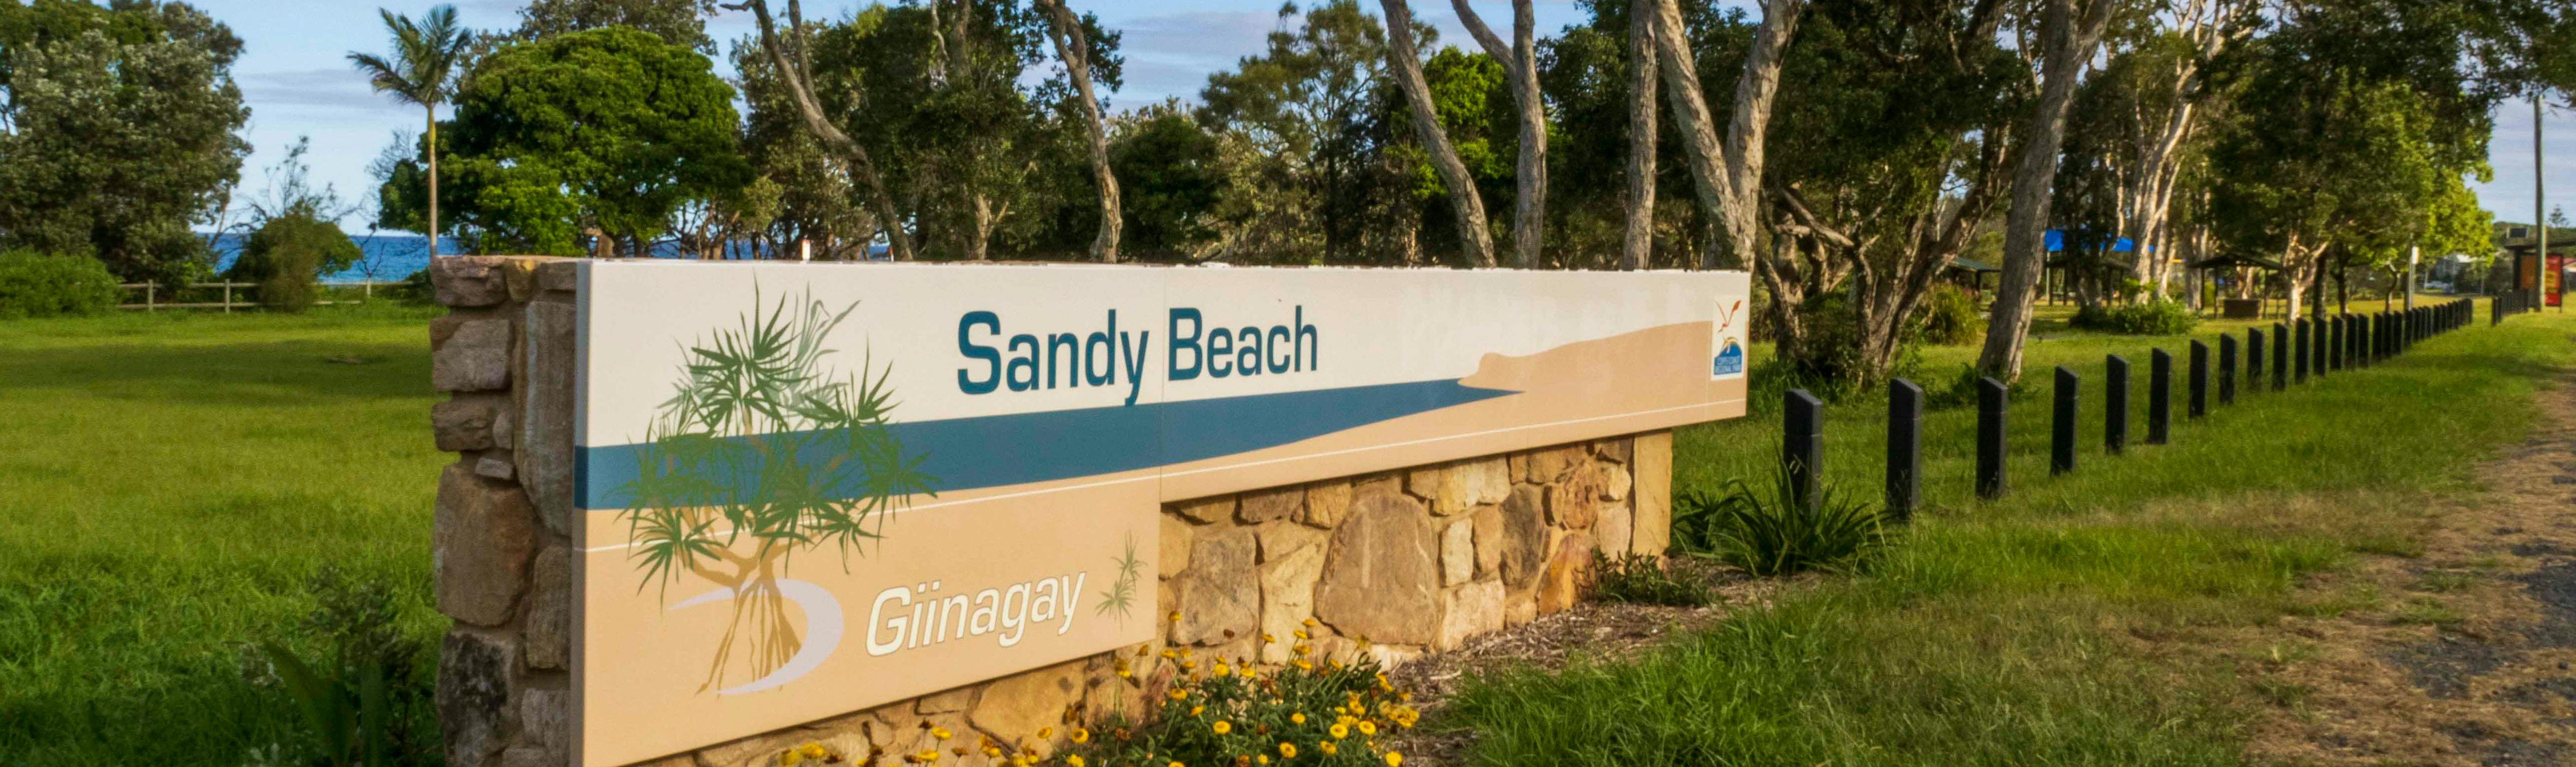 Sandy Beach Reserve forms part of the Coffs Coast Regional Park